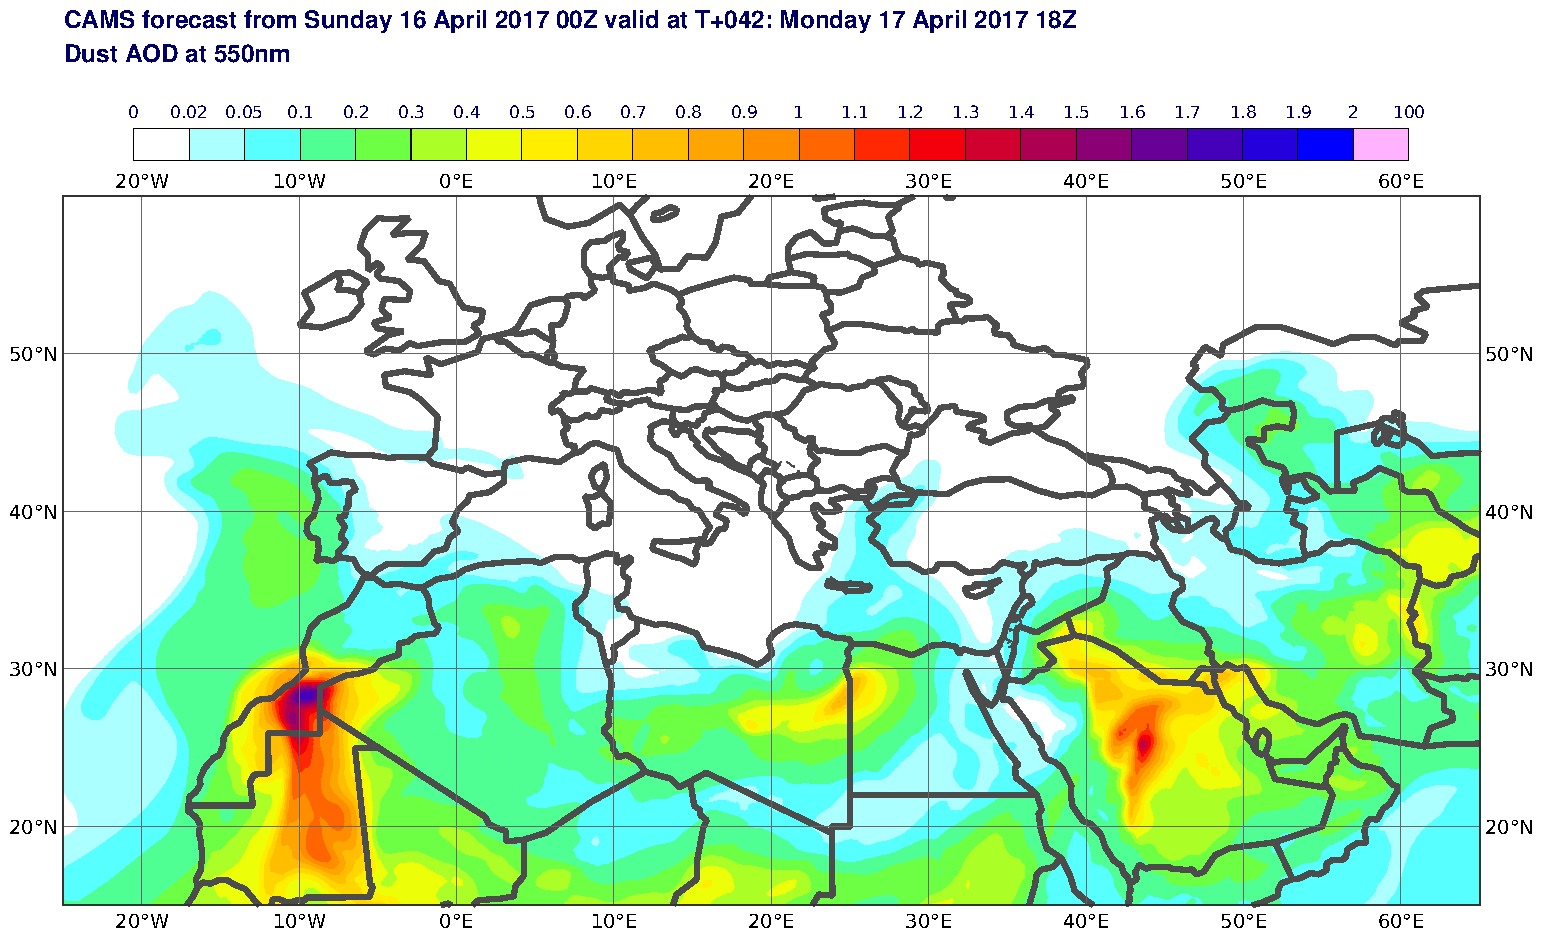 Dust AOD at 550nm valid at T42 - 2017-04-17 18:00